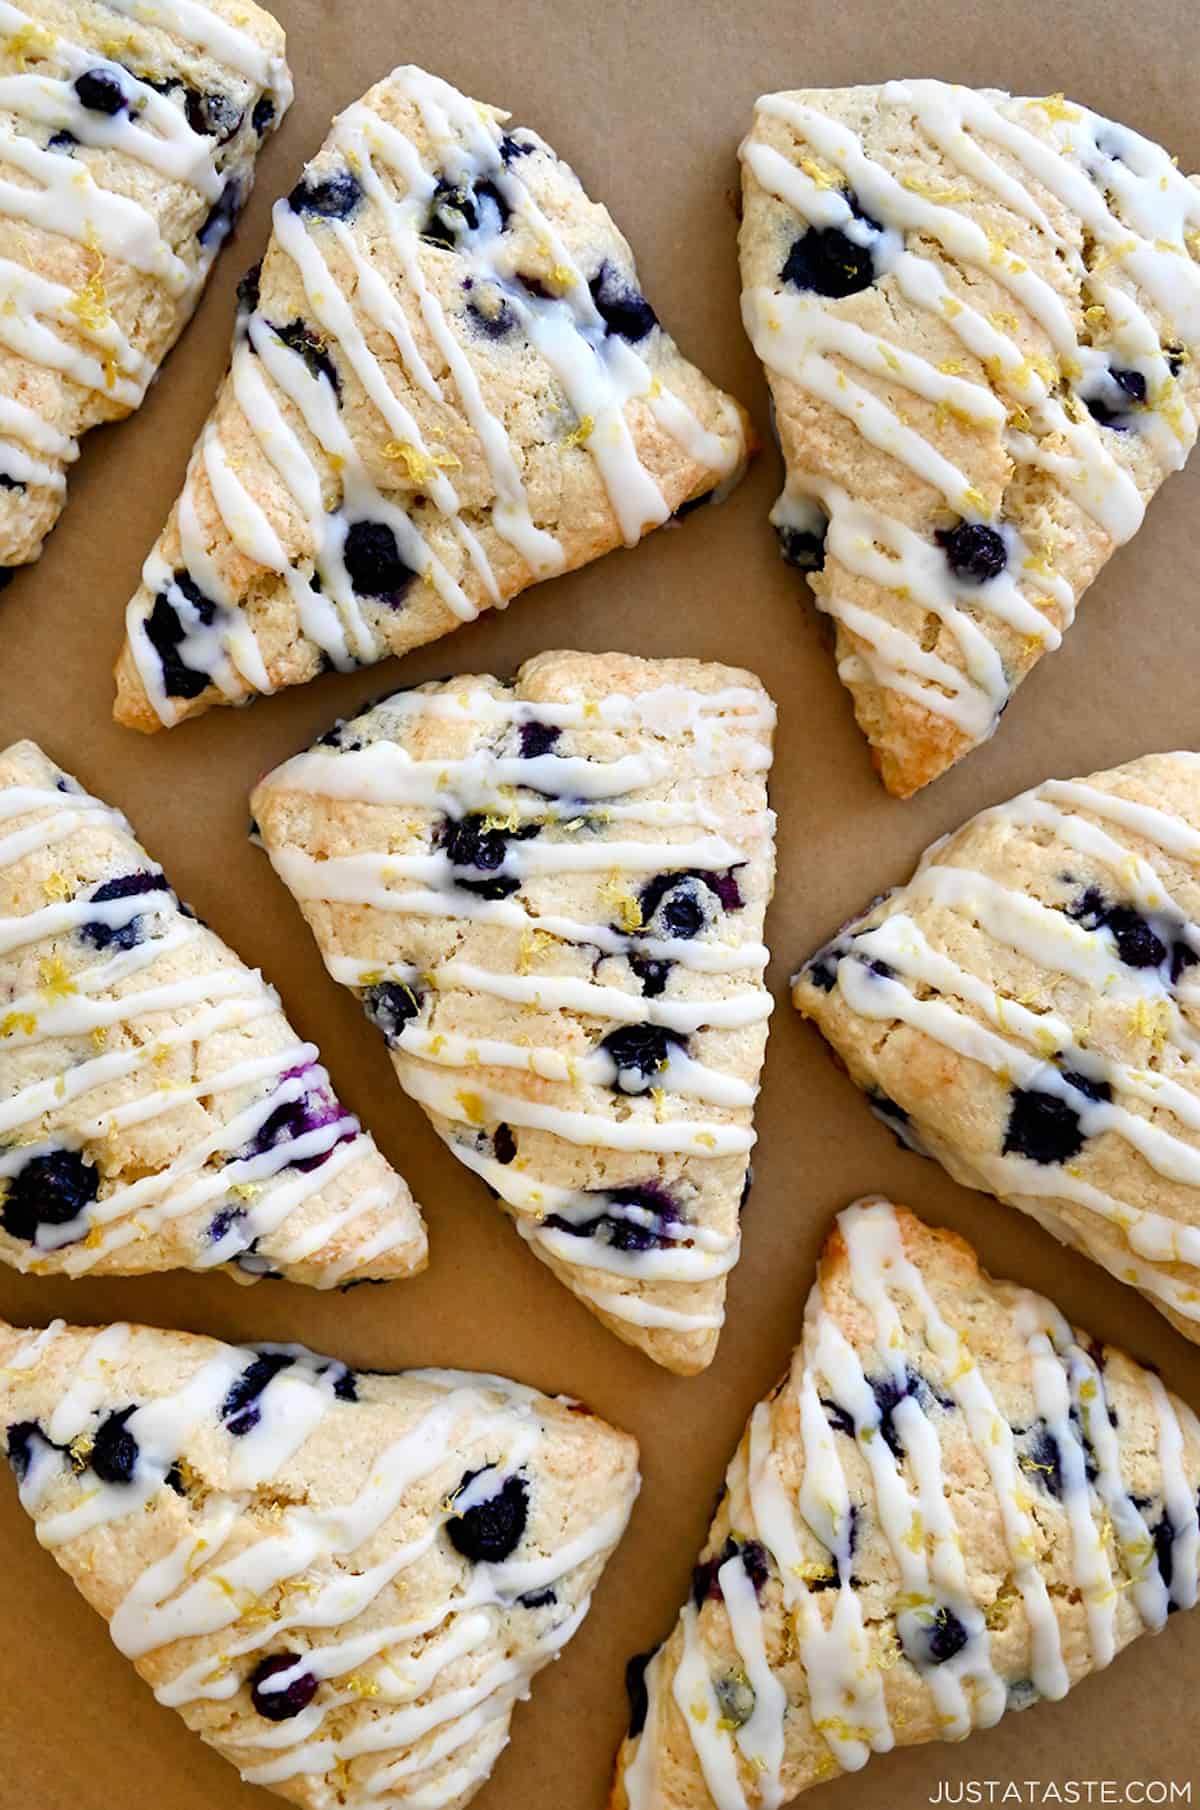 A close-up view of lemon glazed blueberry scones.